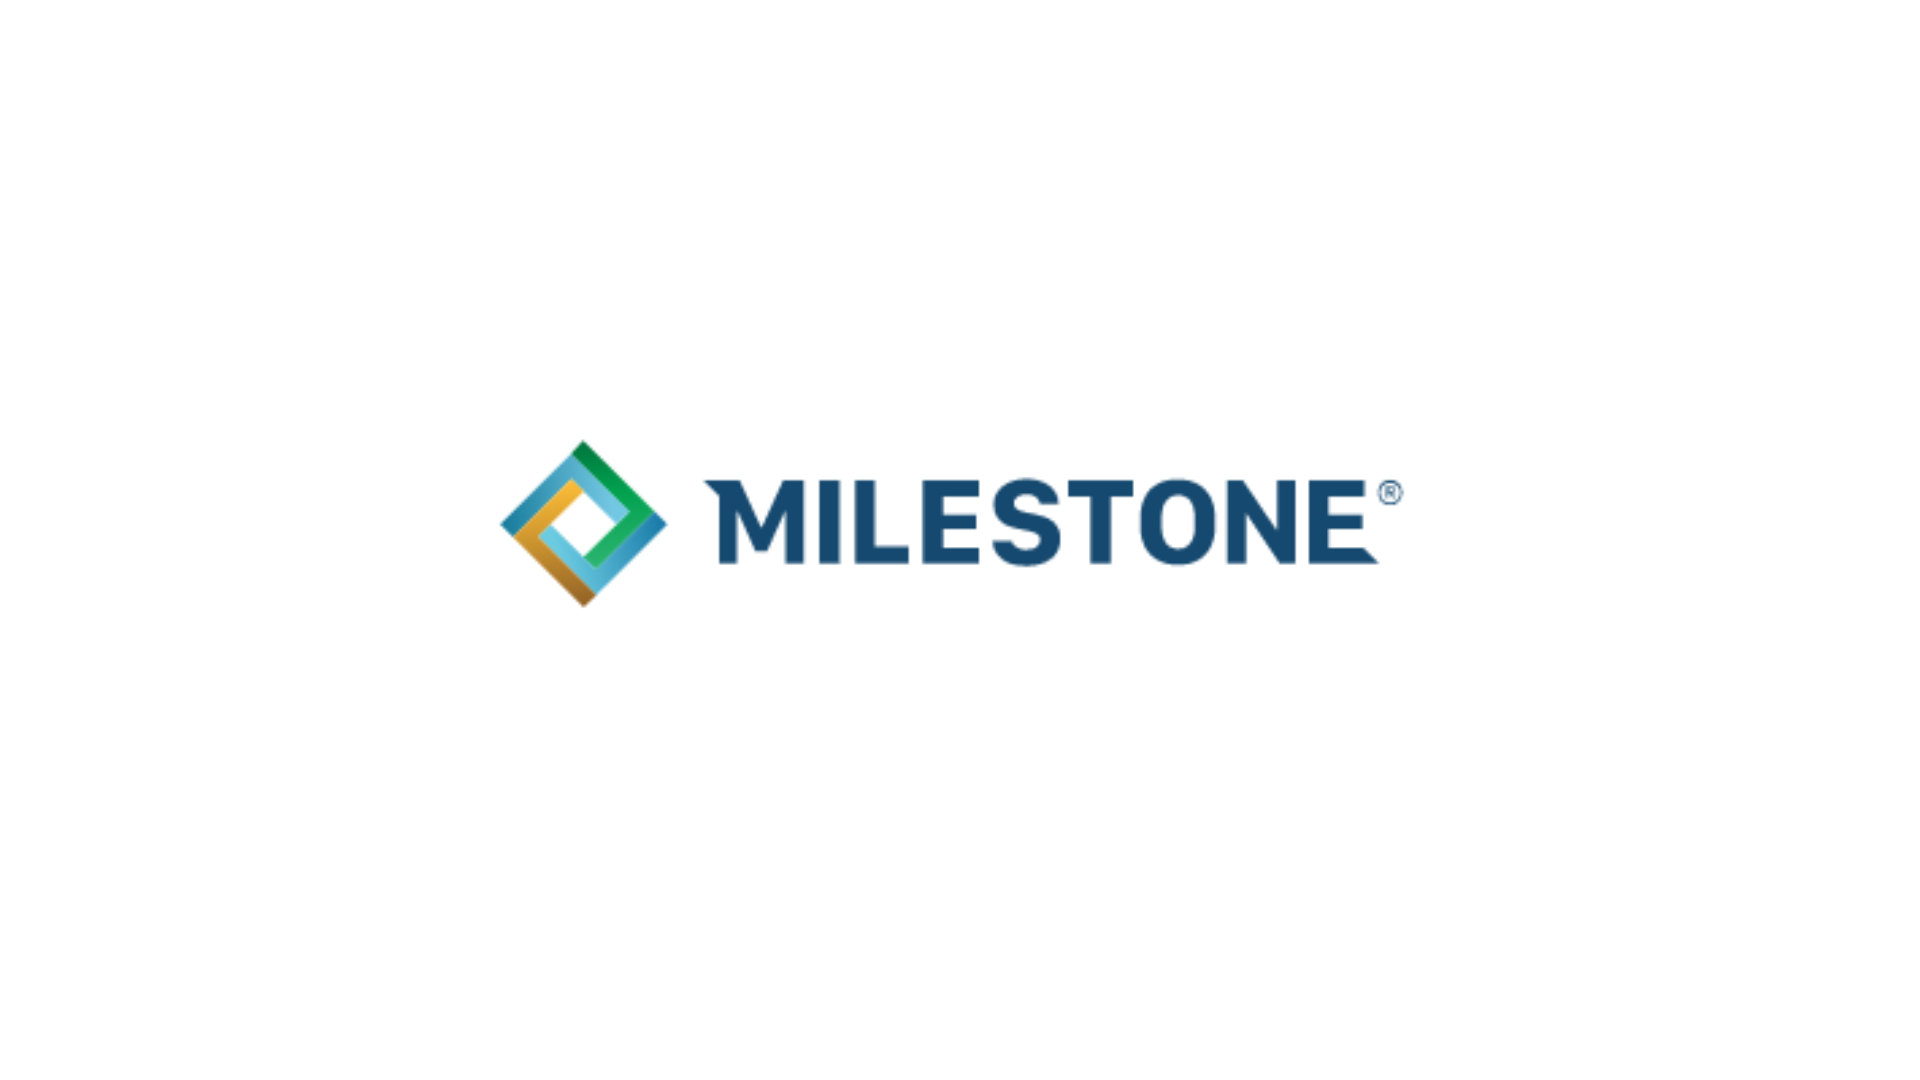 Milestone® logo